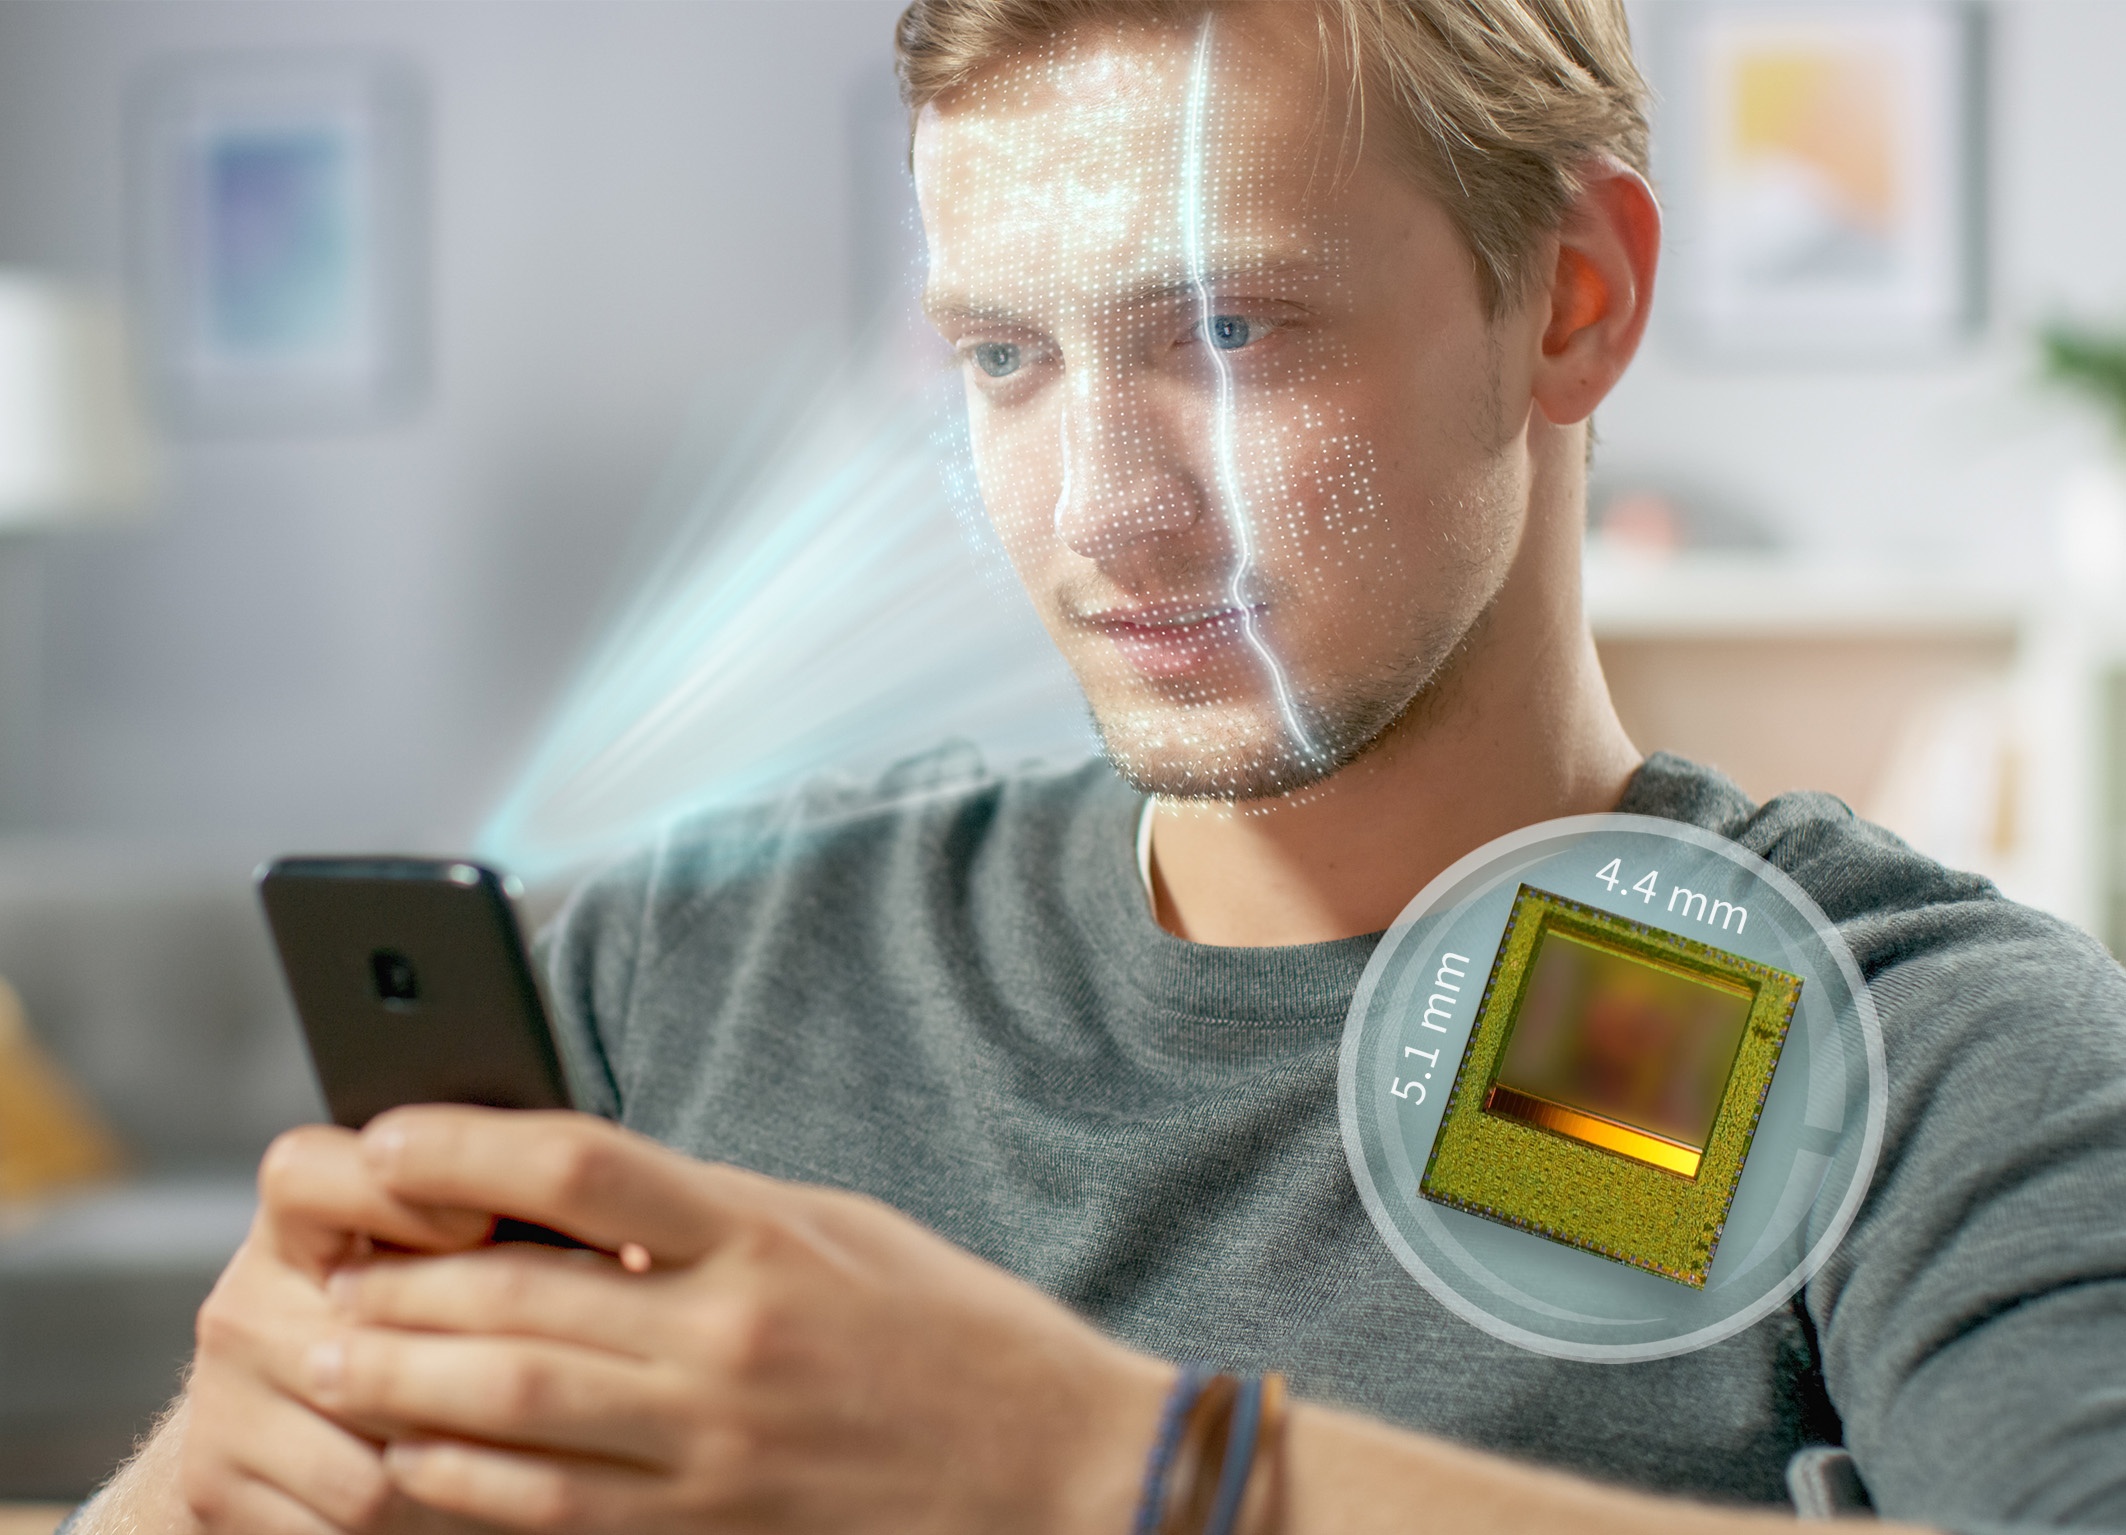 Infineon Develops 3D image Depth Sensors for Biometric Authentication